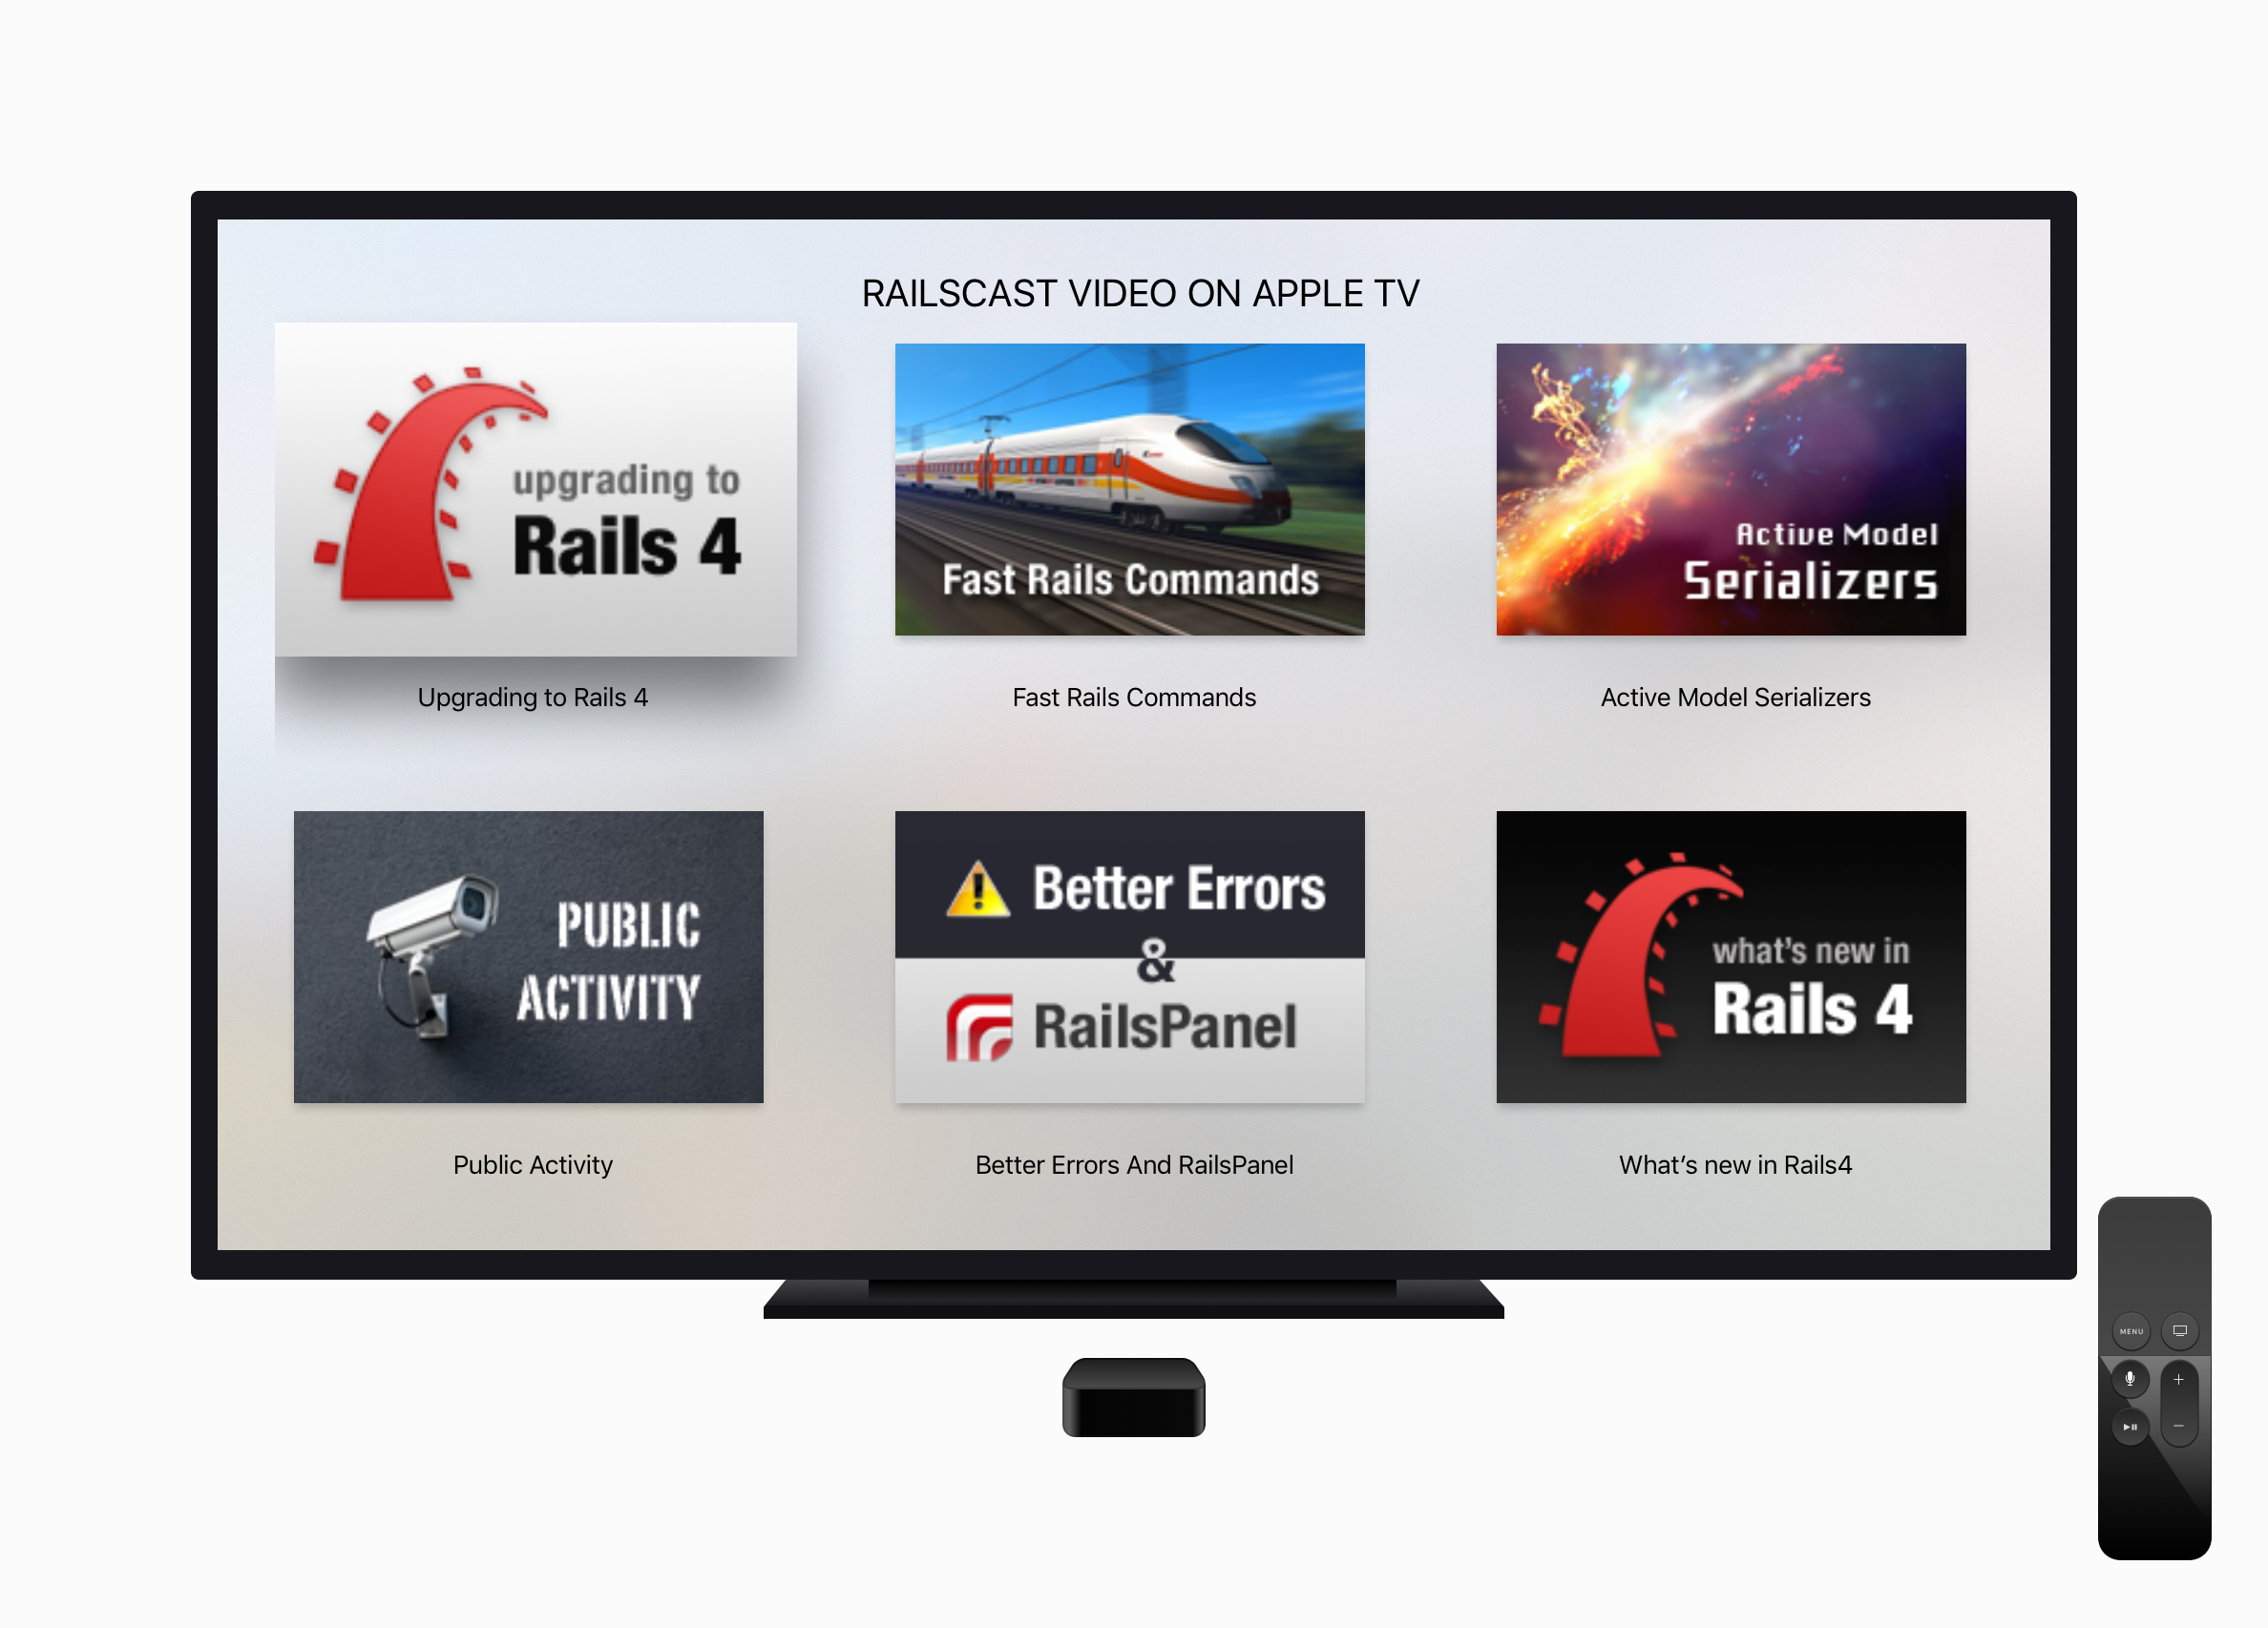 Apple Tv Rails casts video screenshot